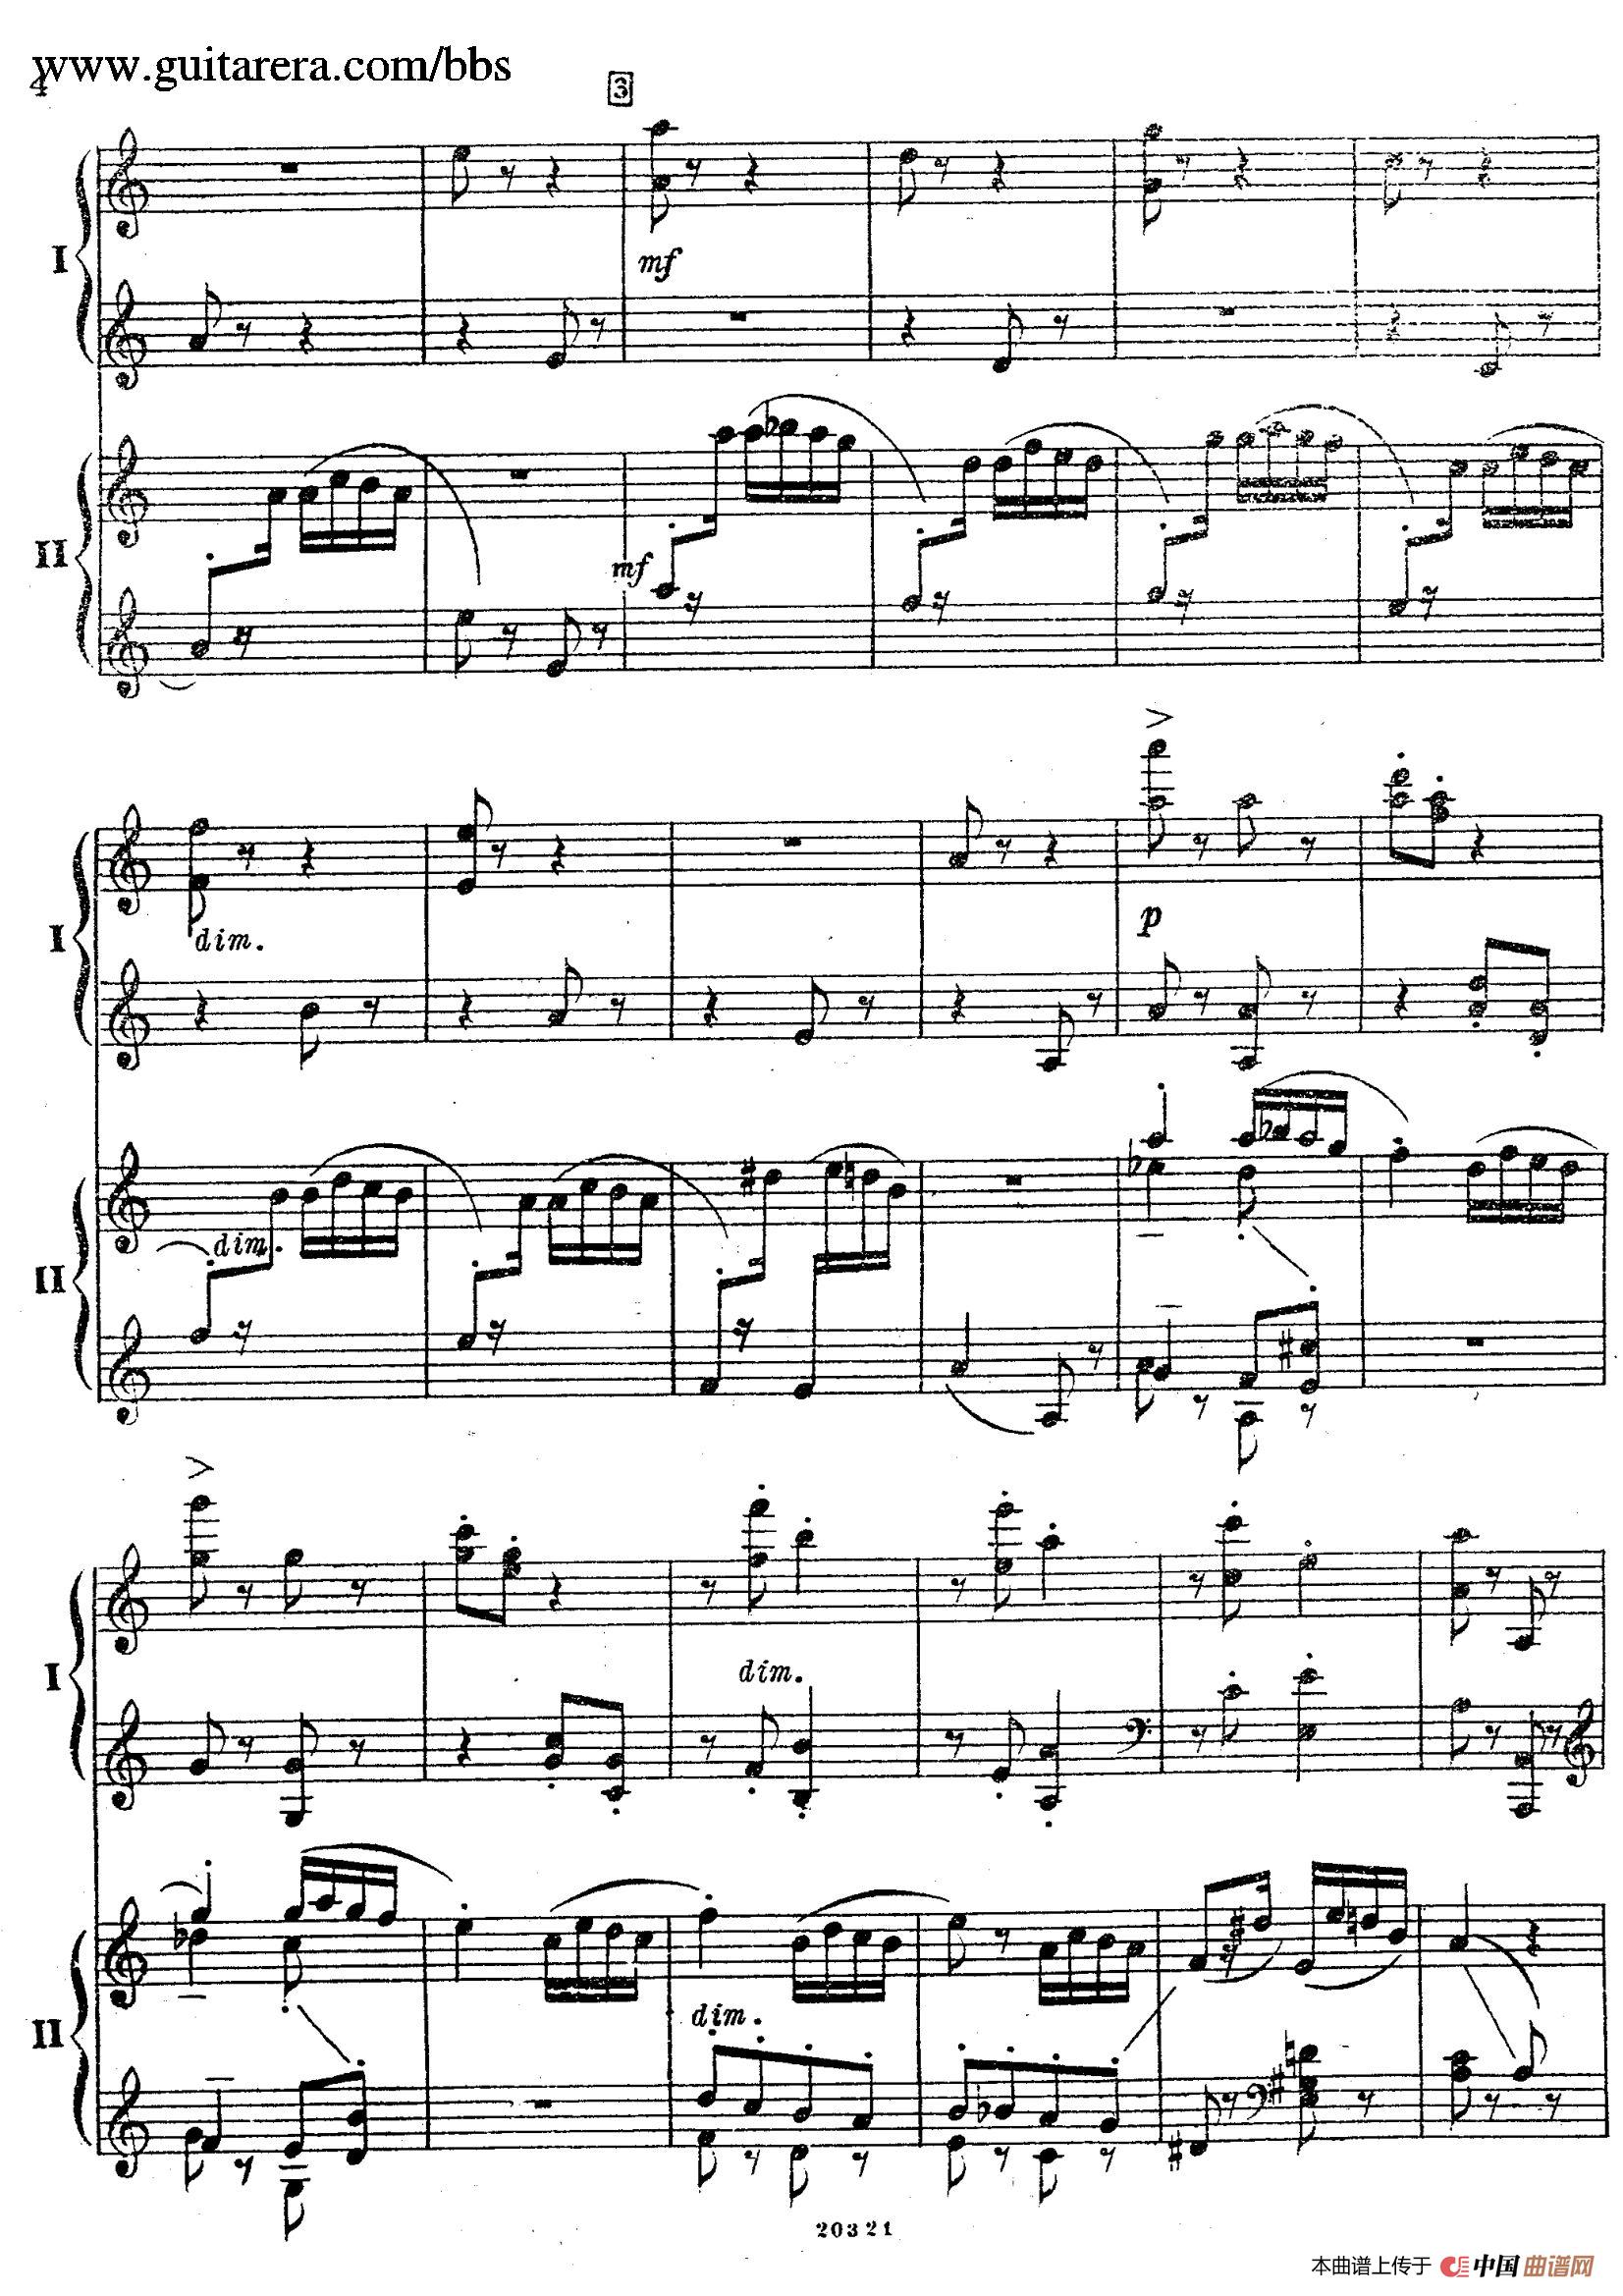 《Rhapsody On A Theme Of Paganini Op.43》钢琴曲谱图分享